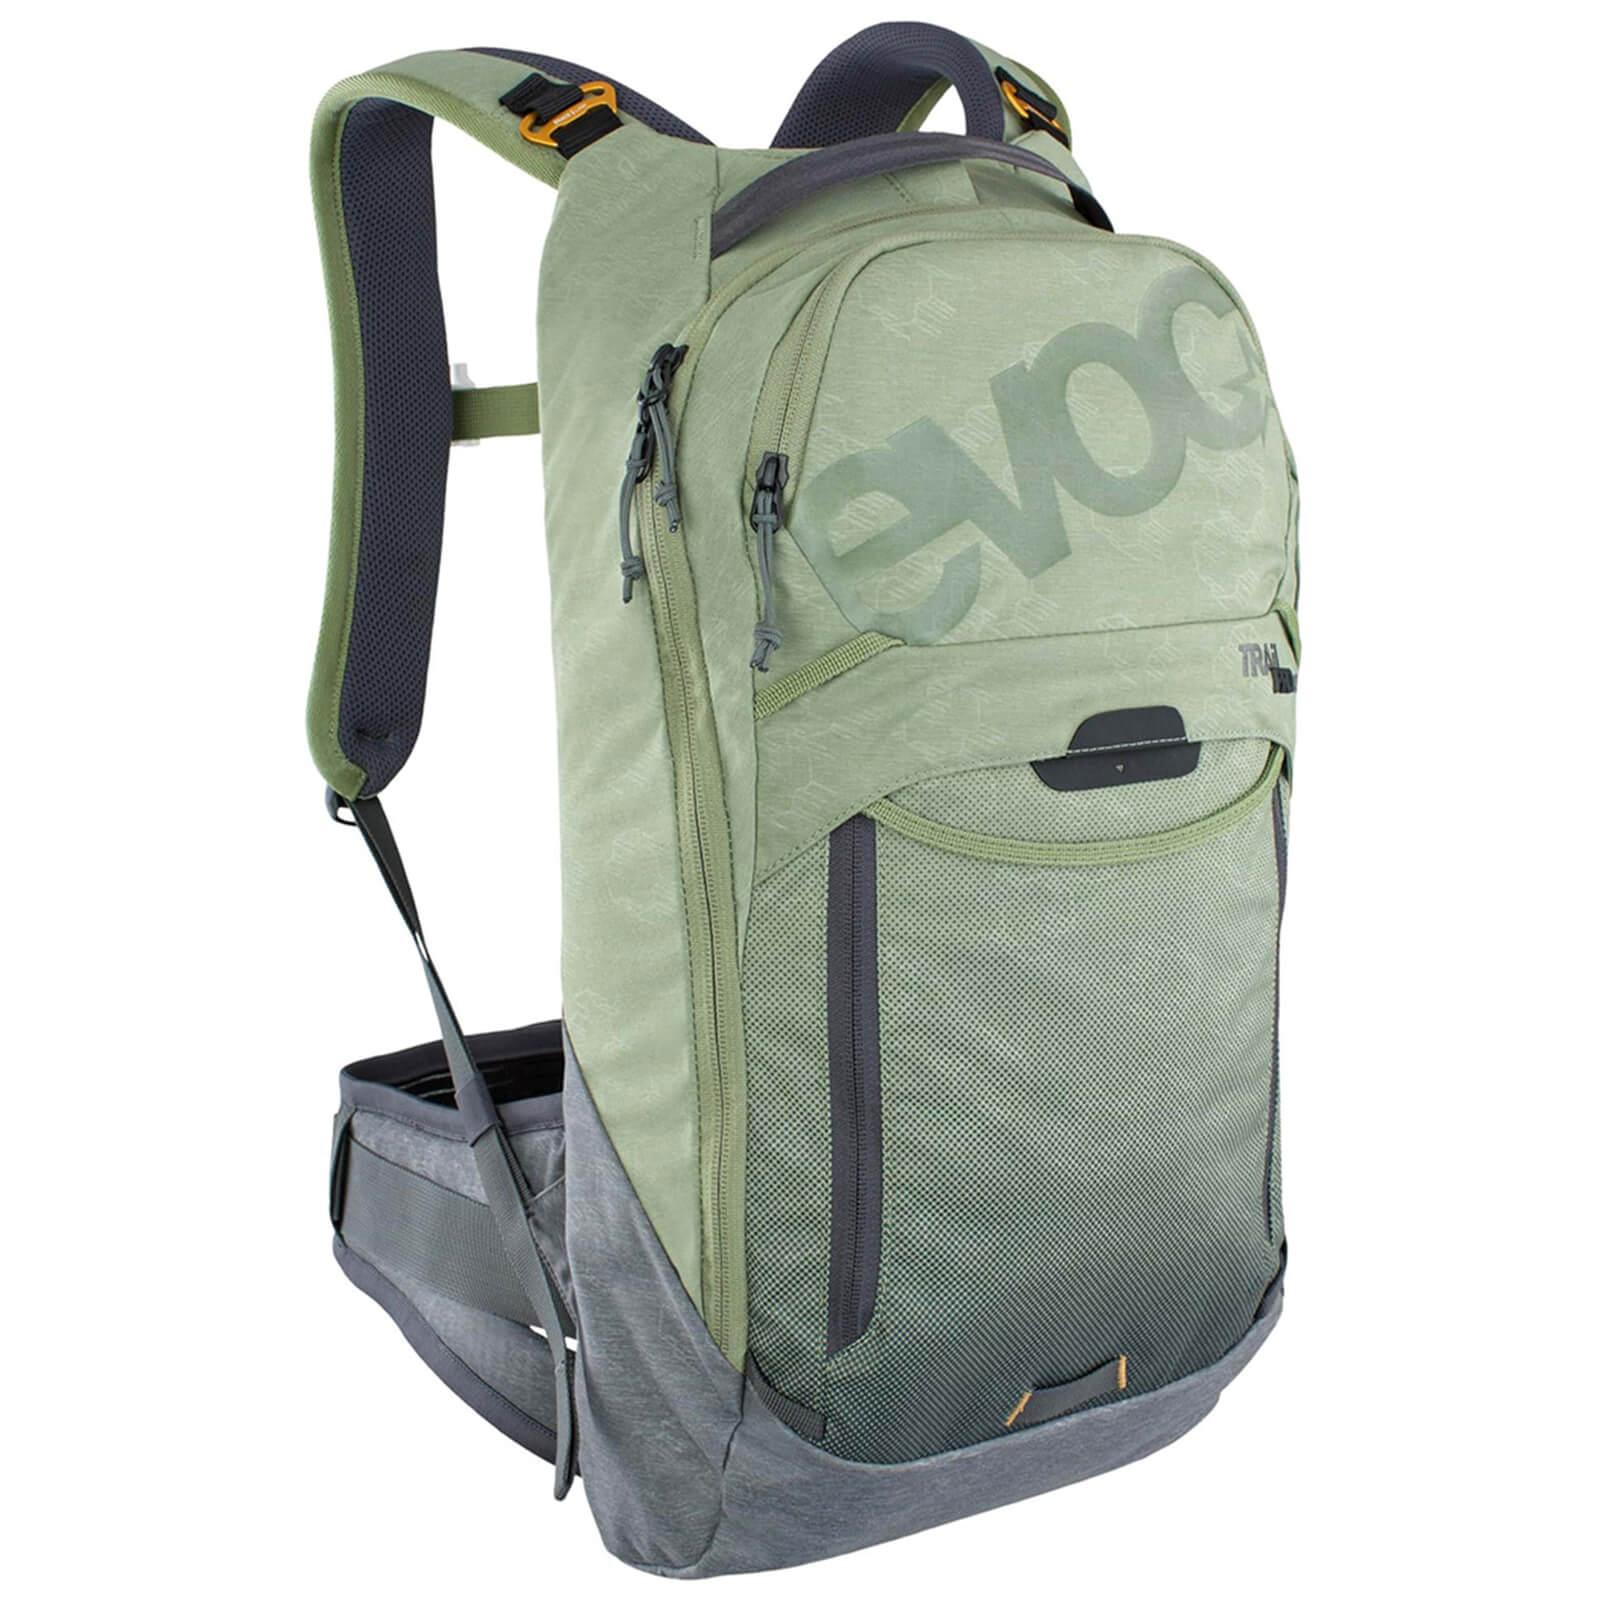 Evoc Trail Pro Protector 10L Backpack - S/M - Light Olive/Carbon Grey